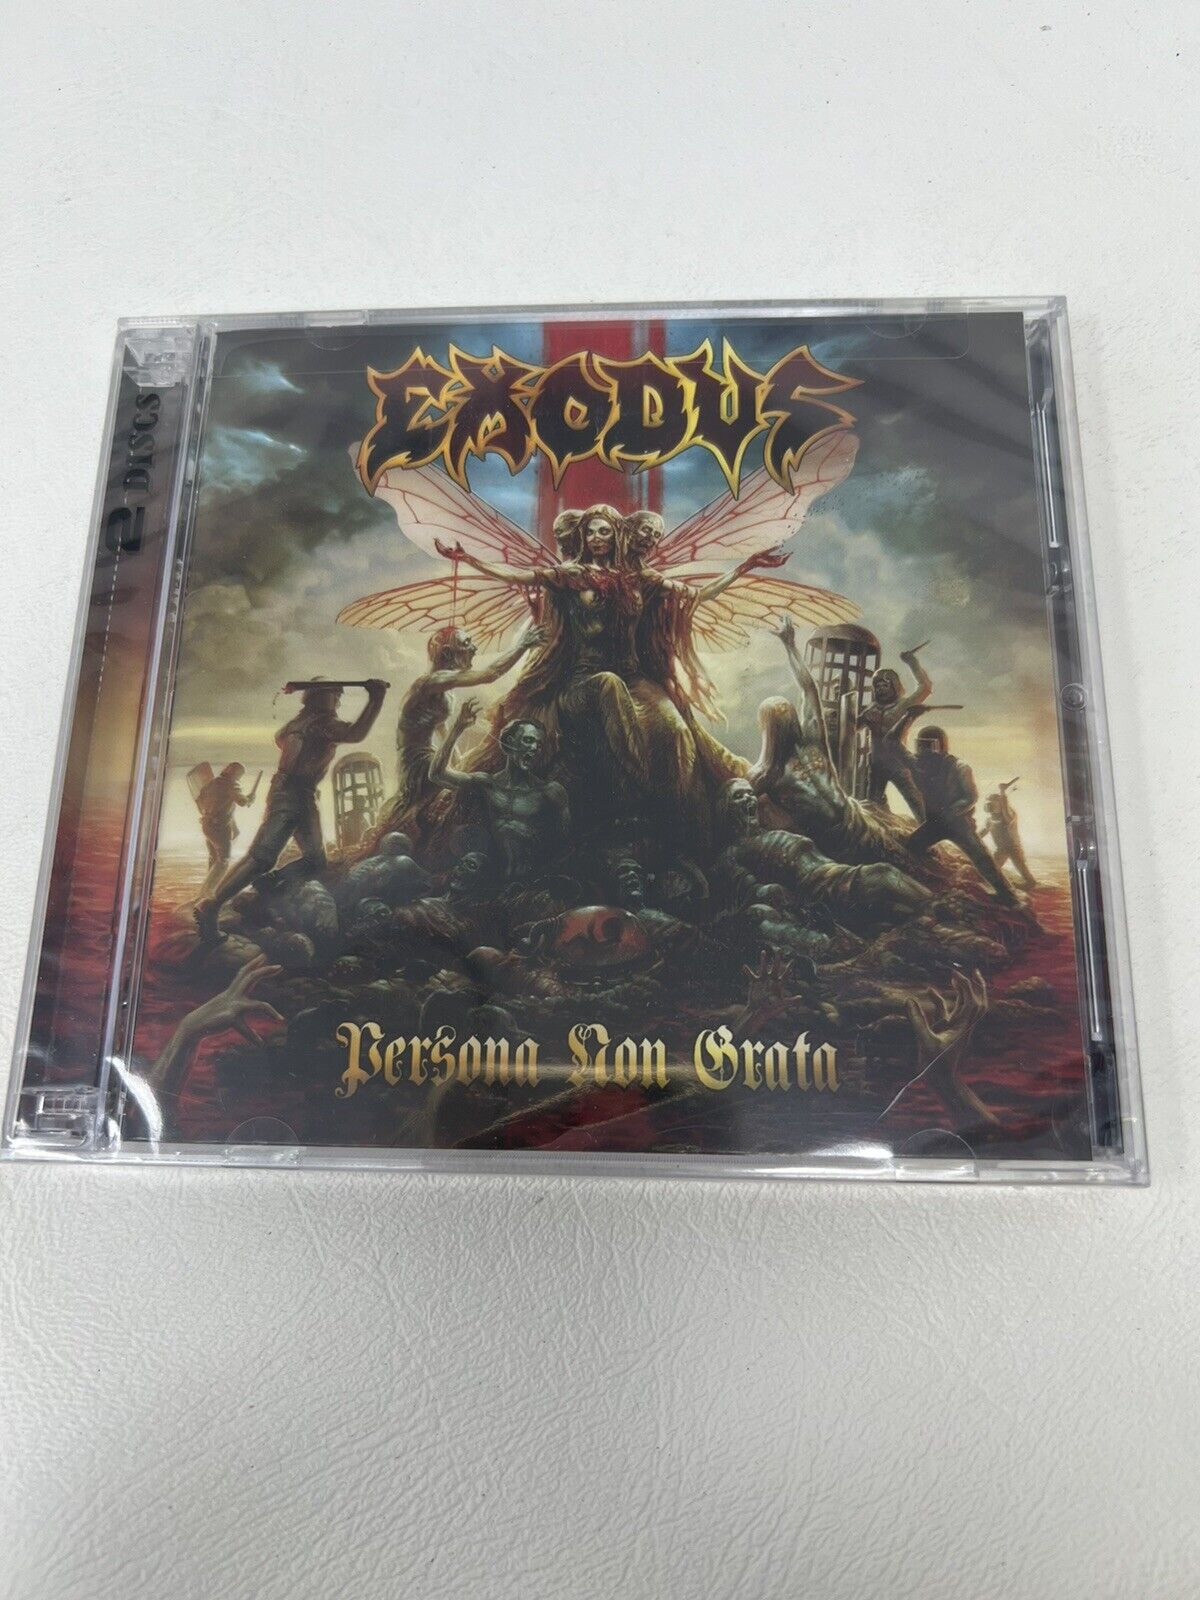 Exodus - Persona Non Grata (CD + Blu-Ray) [New CD] With Blu-Ray